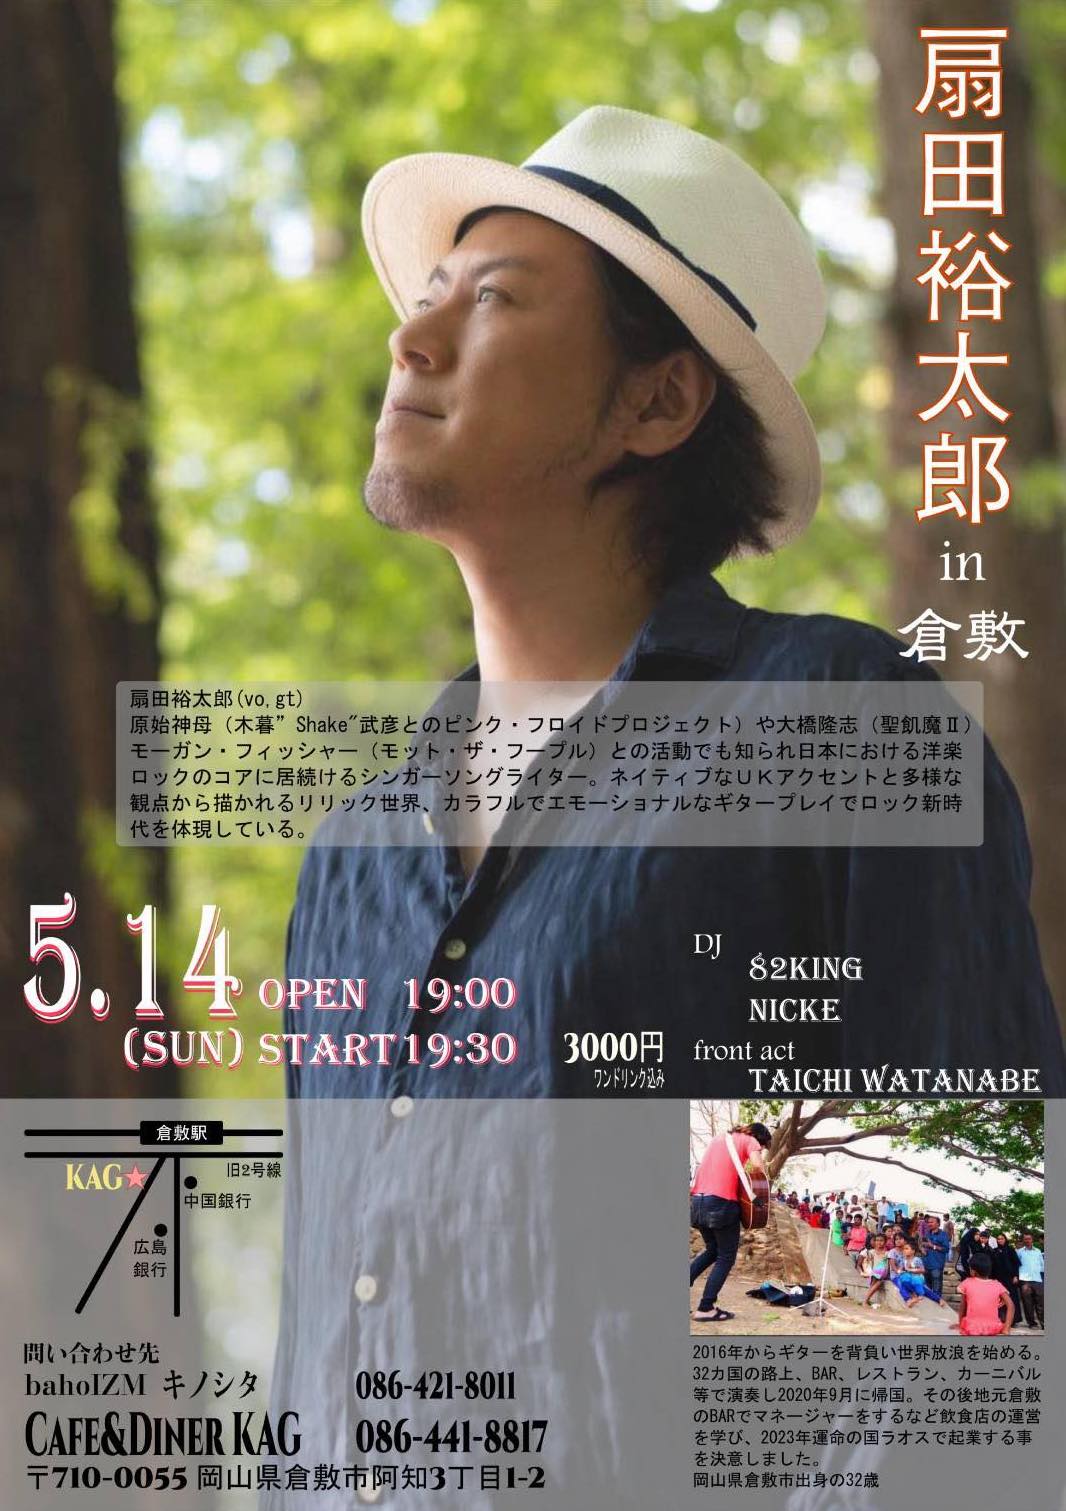 5/15(mon) 扇田裕太郎 LIVE in NARA【奈良プラチナ食堂 からLIVE配信】